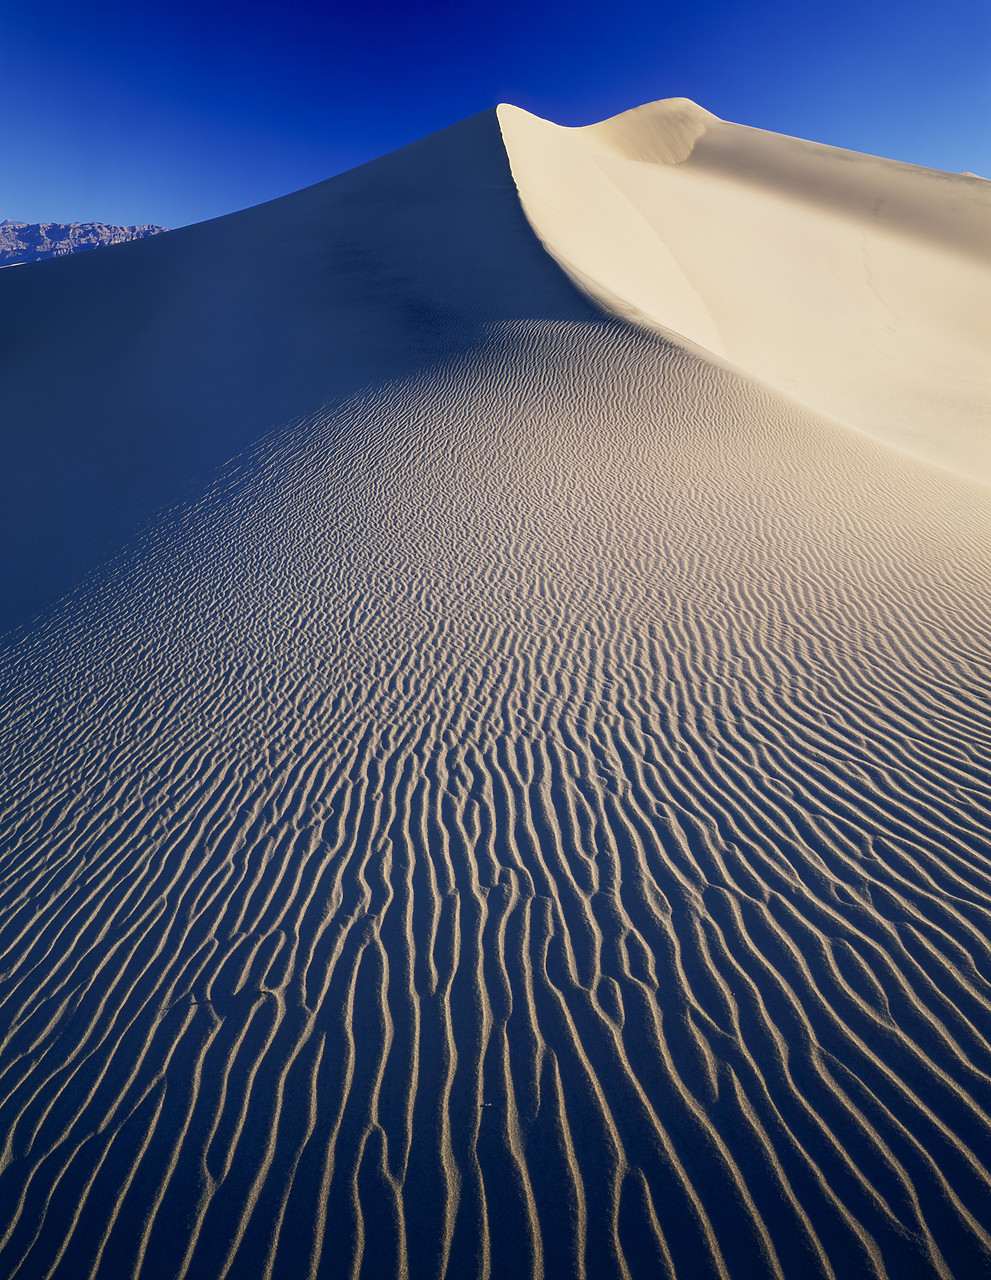 #040018-1 - Mesquite Dunes, Death Valley National Park, California, USA